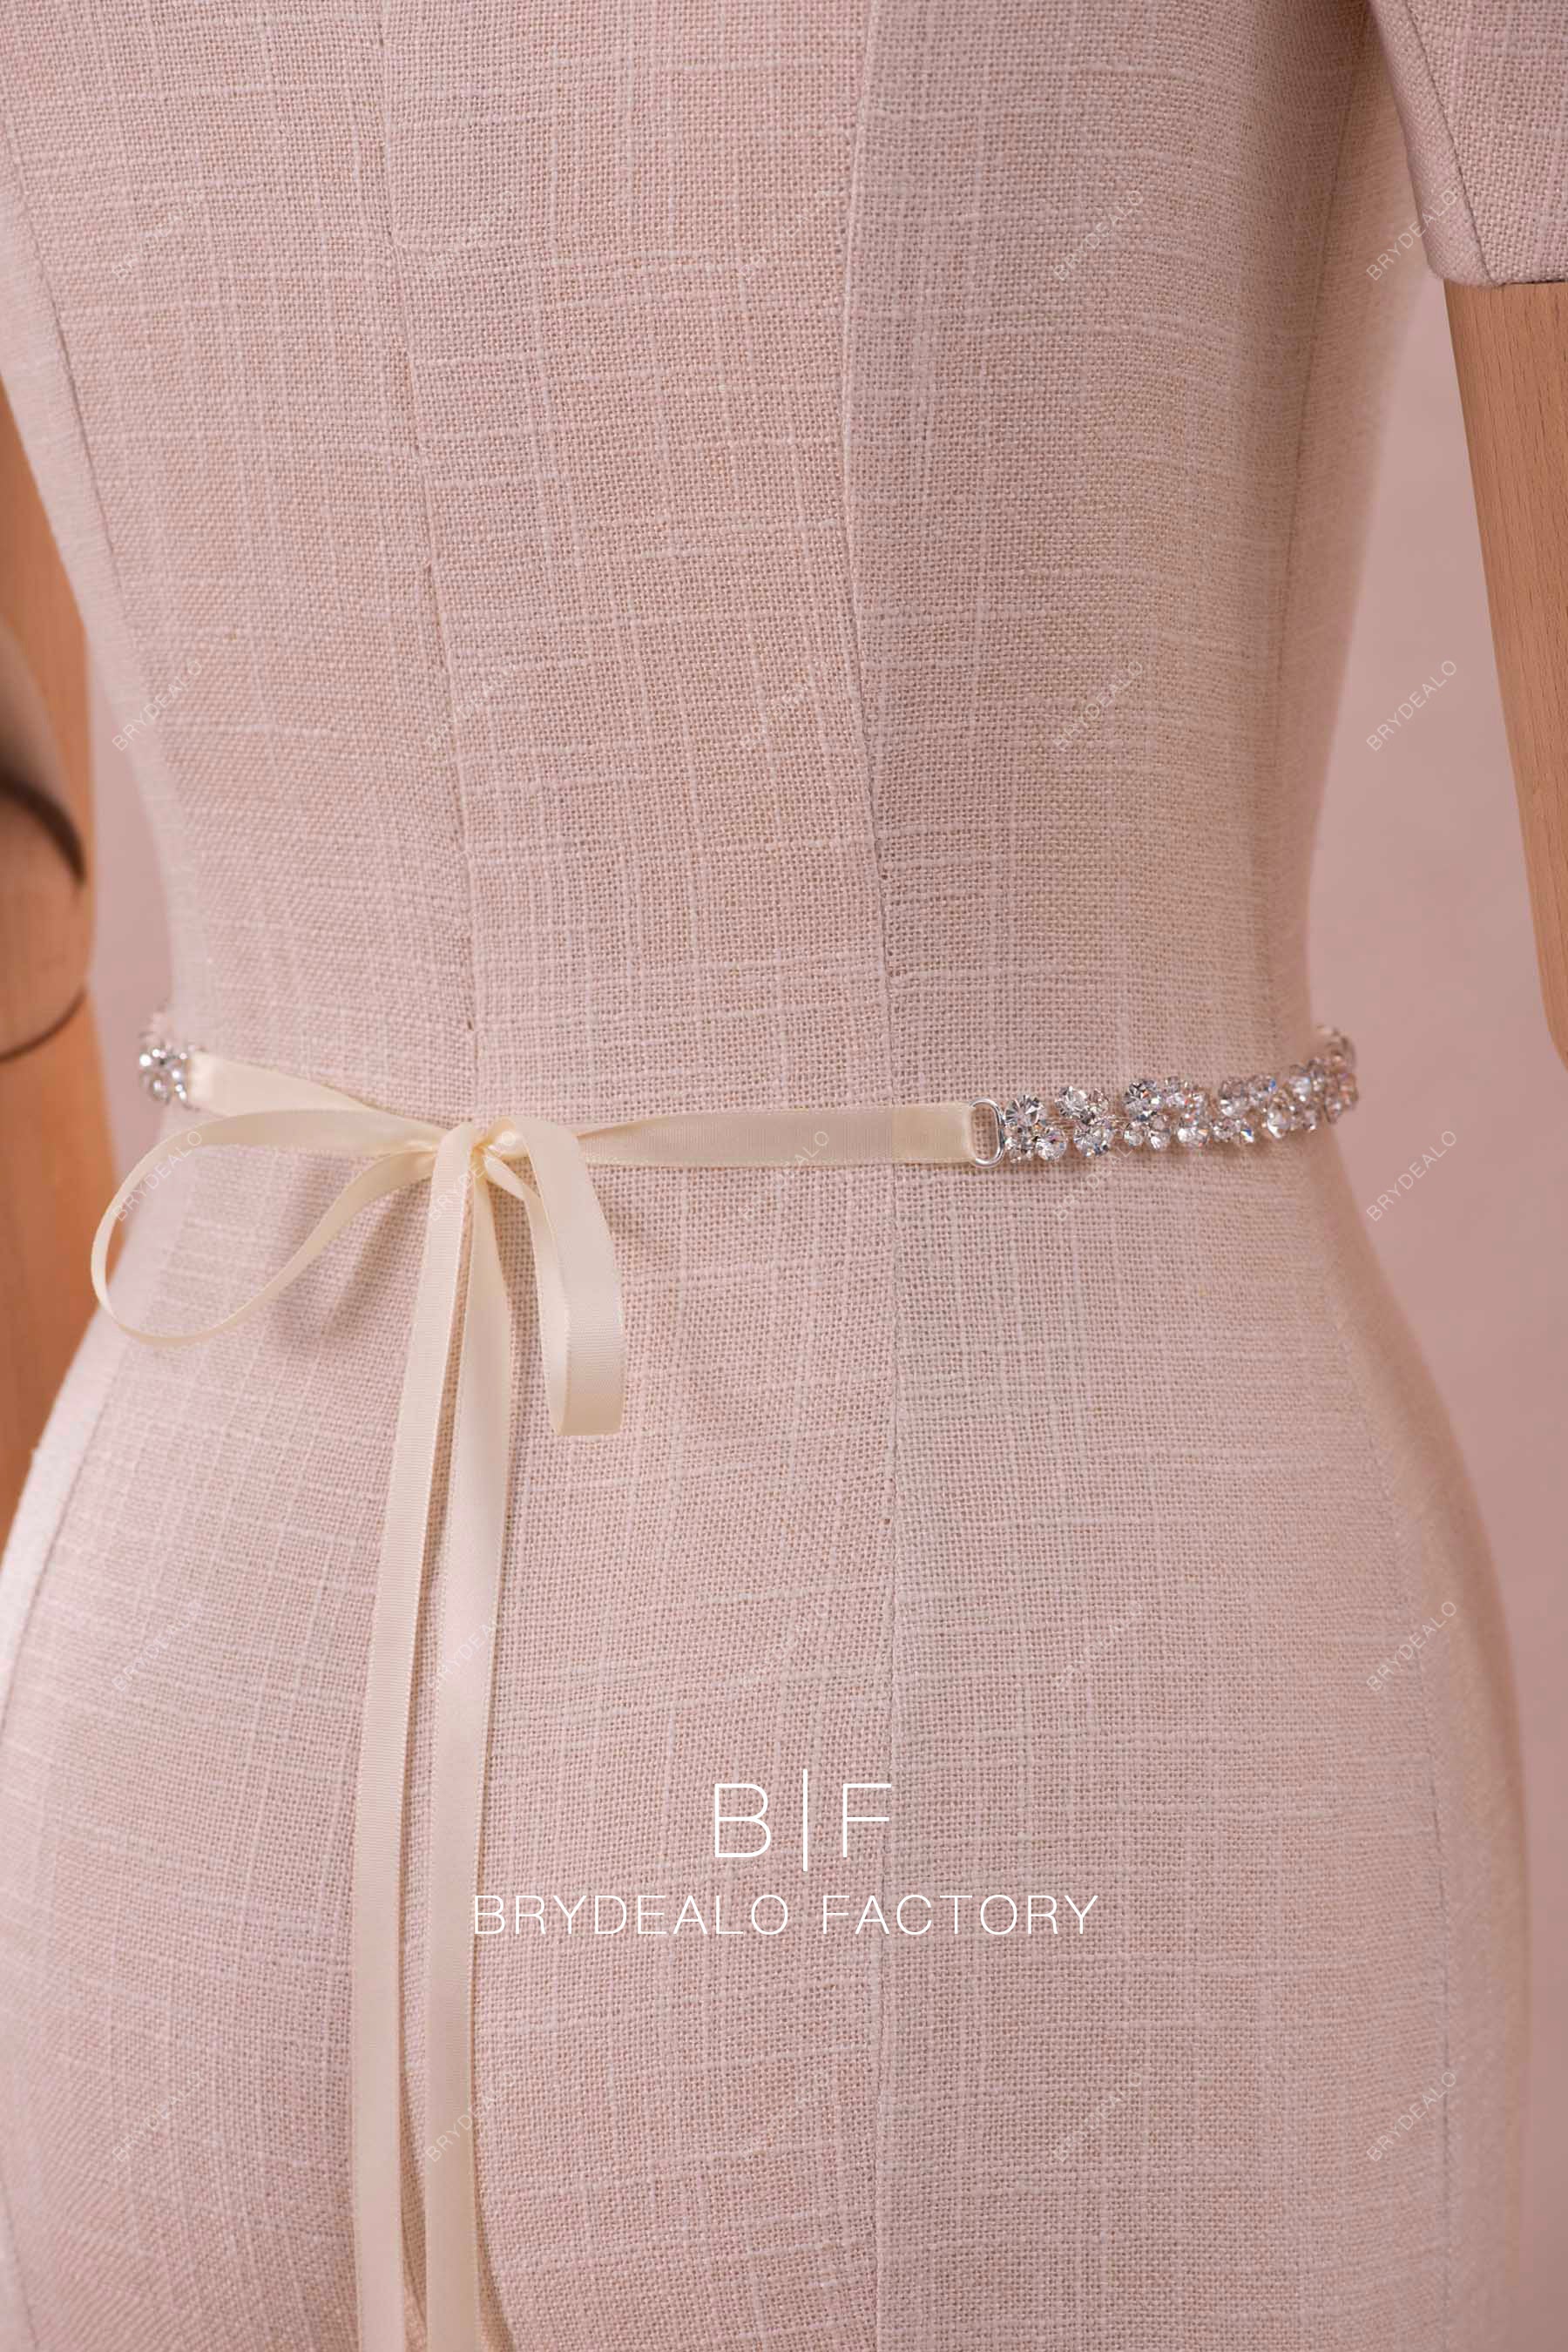 fashion back sash closure rhinestone bridal belt